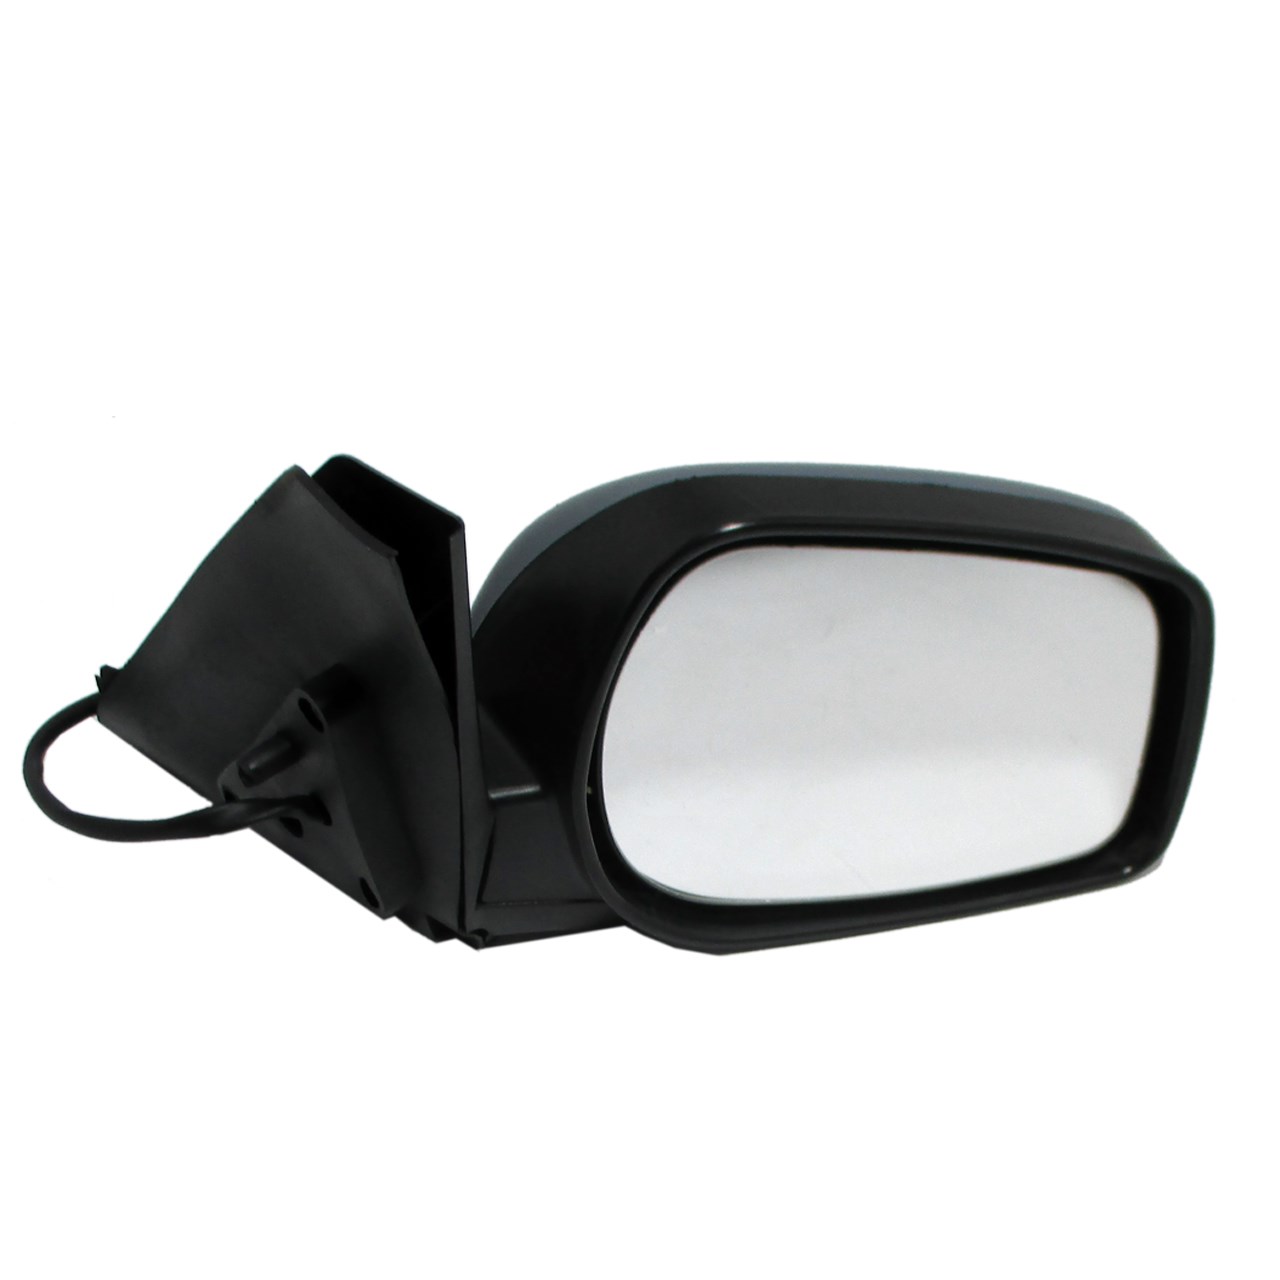 آینه بغل چپ ام وی ام X33 مدل T11-8202010-DQ